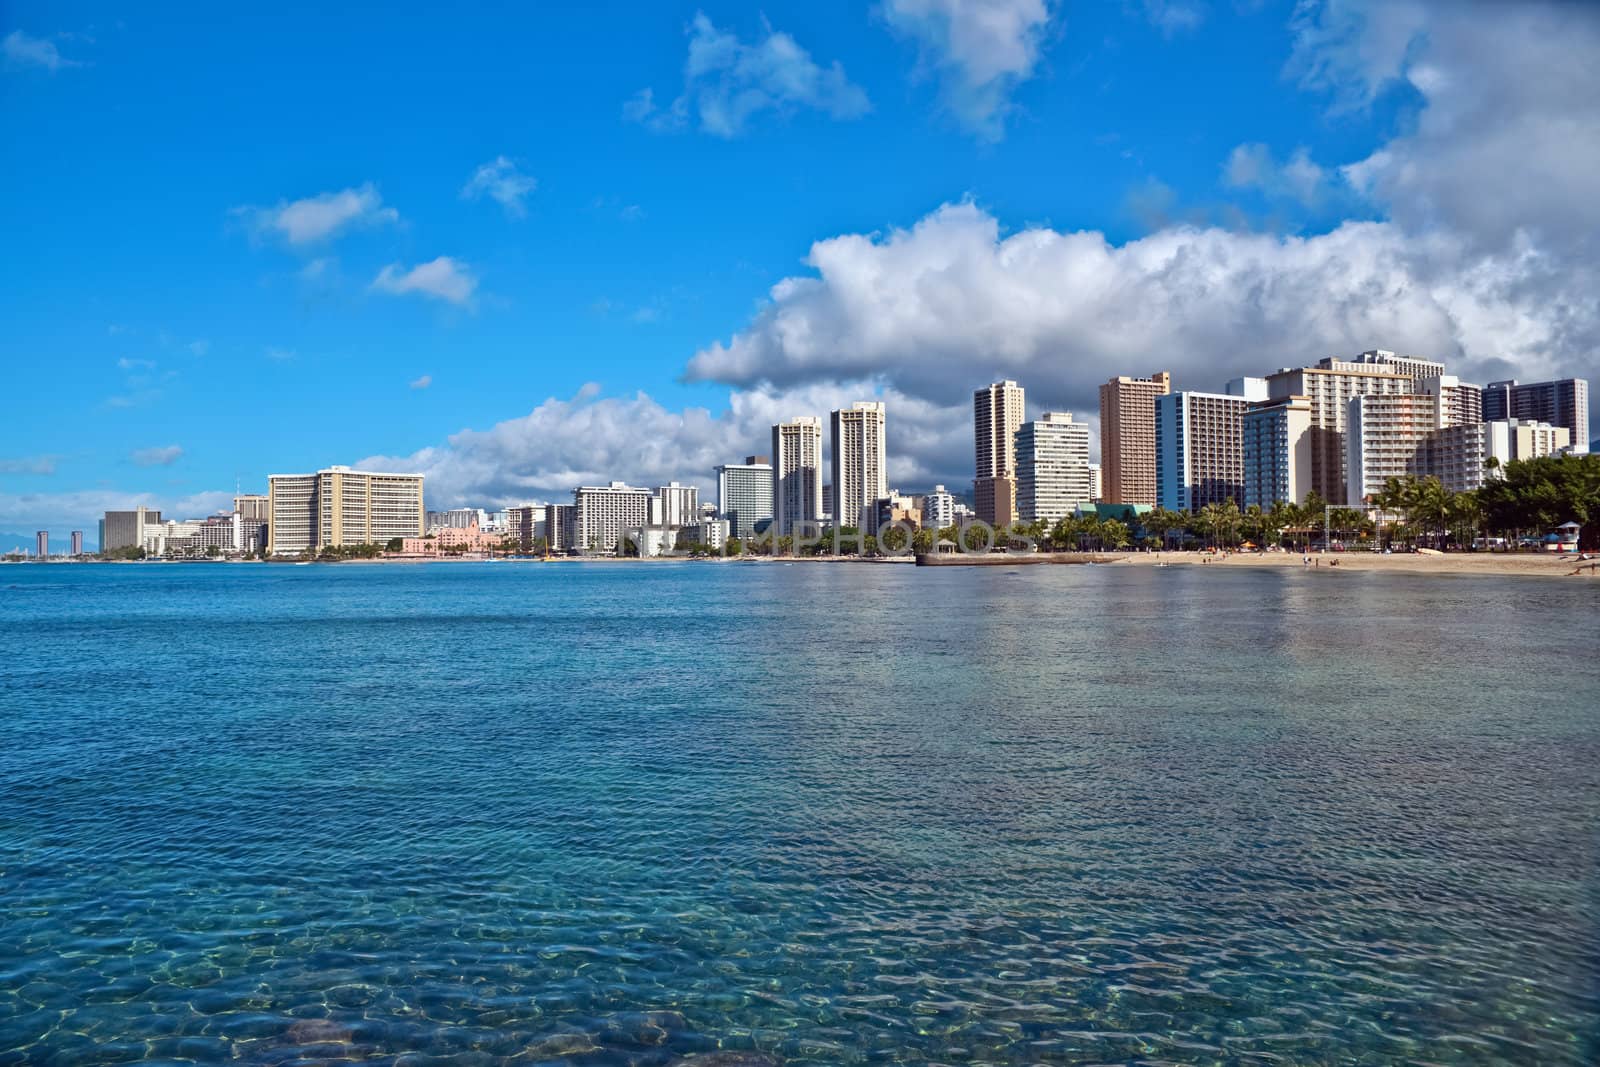 Cityscape Waikiki Beach, Honolulu Hawaii, USA.  Waikiki beach is a popular spot in the city of Honolulu to swim, surf, and relax